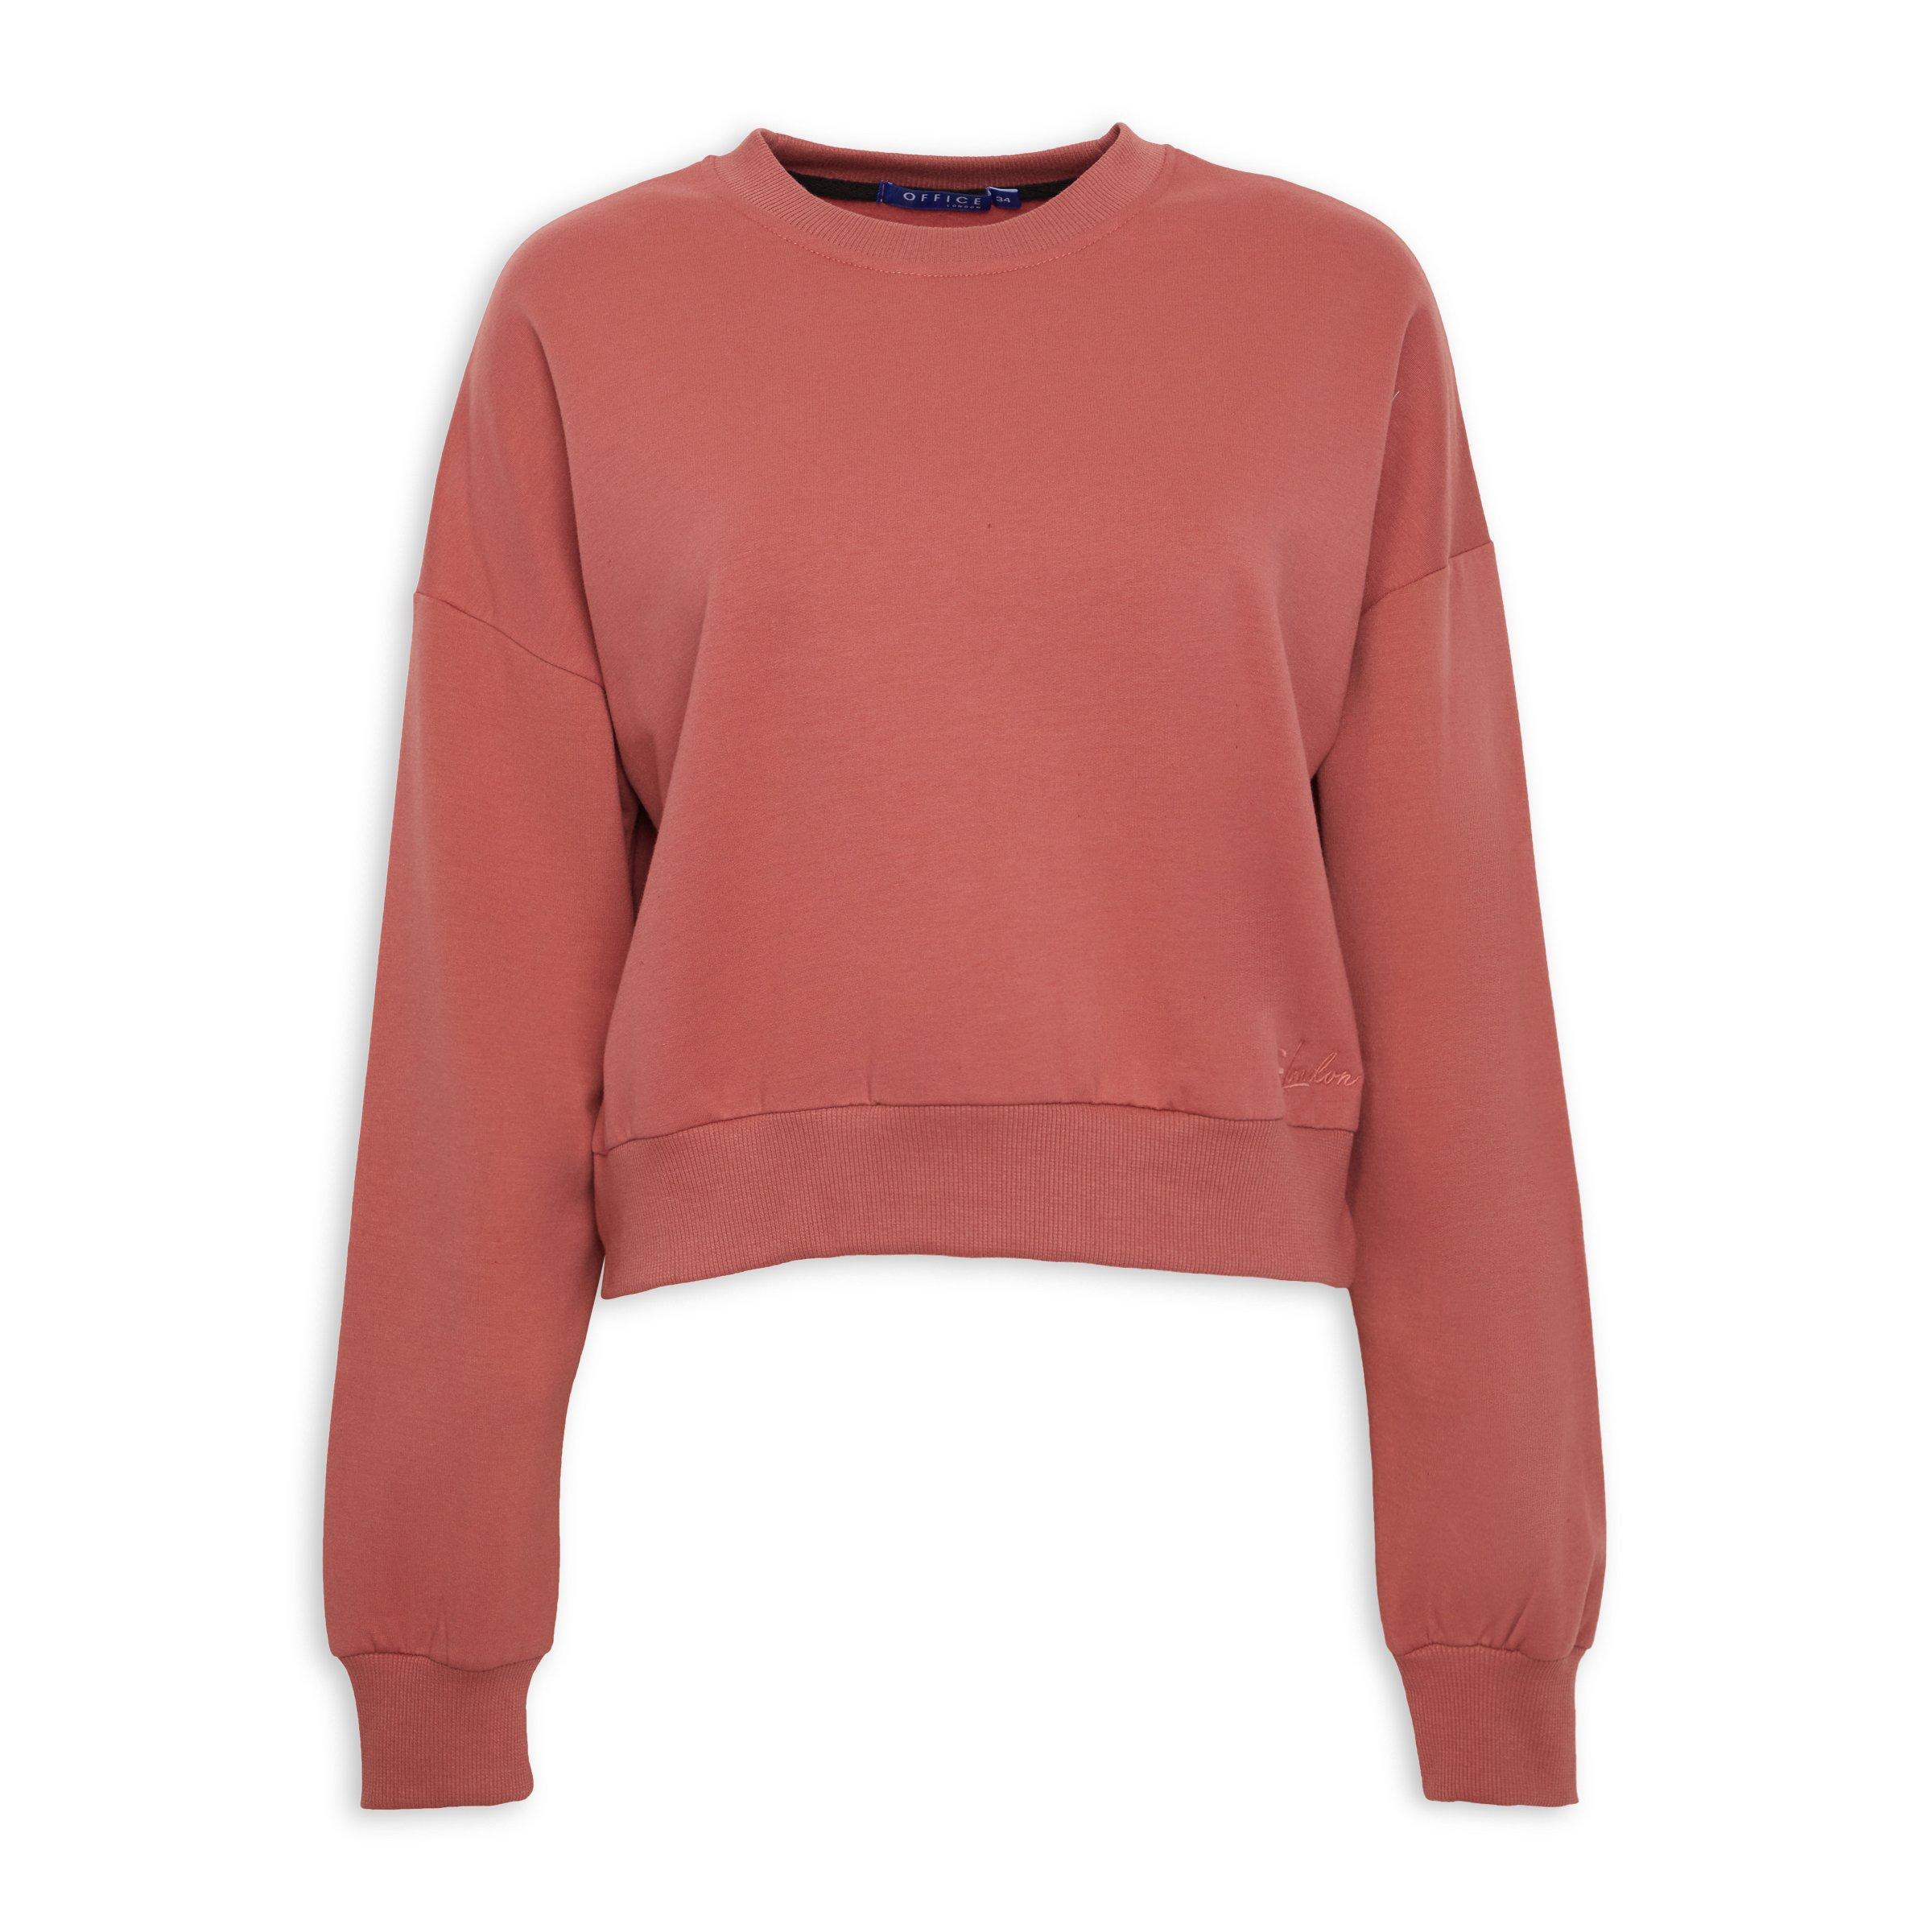 Buy OFFICE London Pink Crew Neck Sweater Online | Truworths